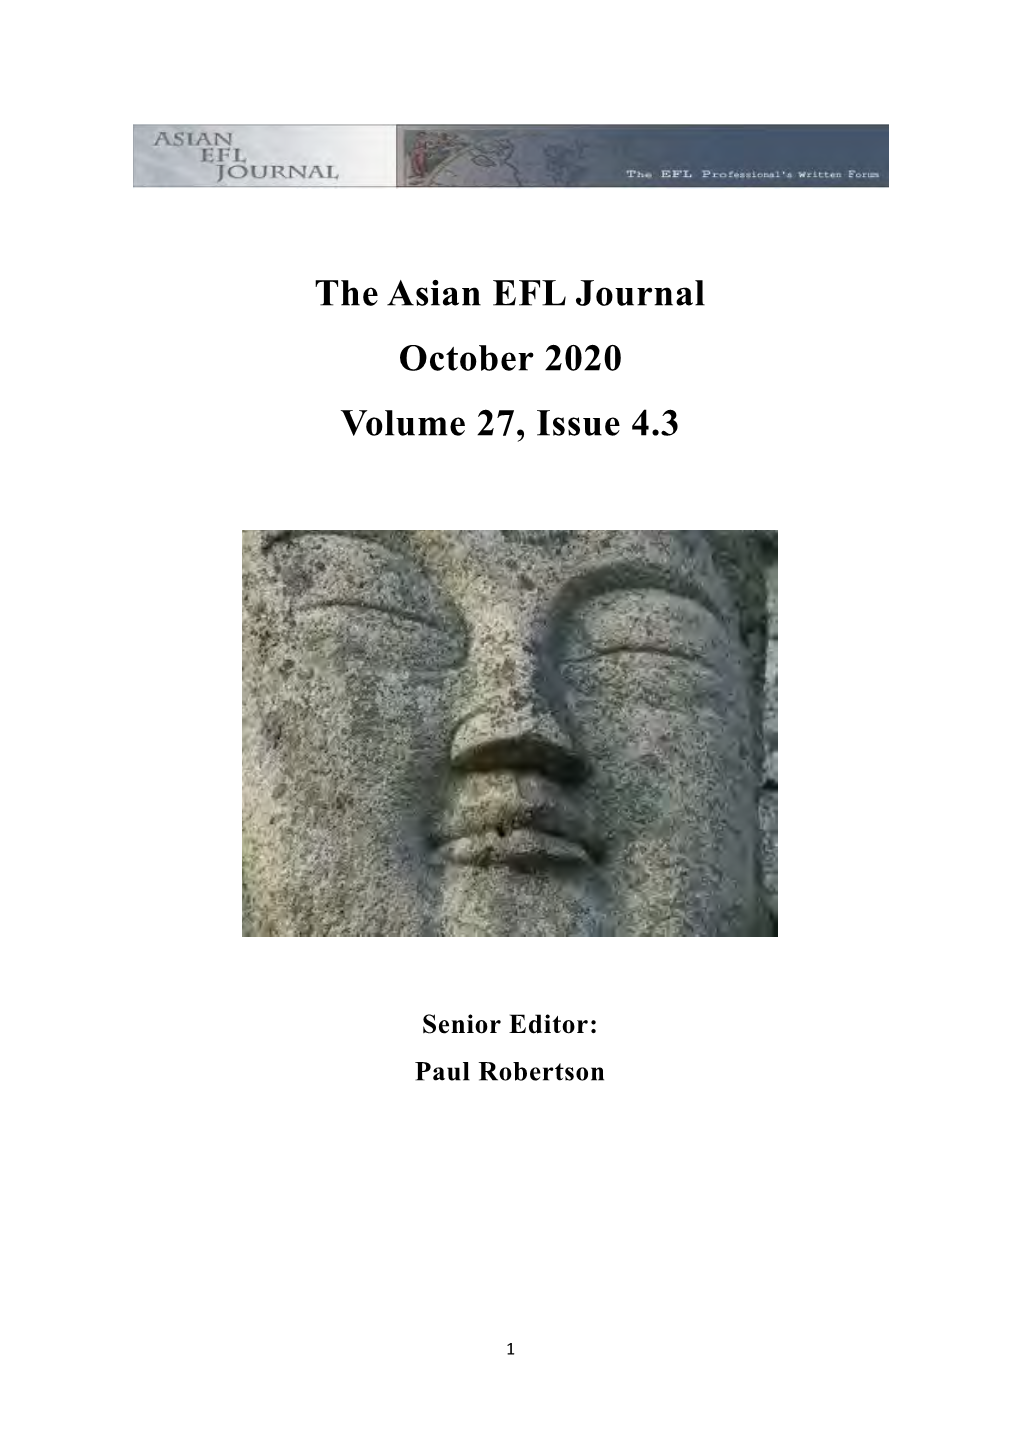 The Asian EFL Journal October 2020 Volume 27, Issue 4.3